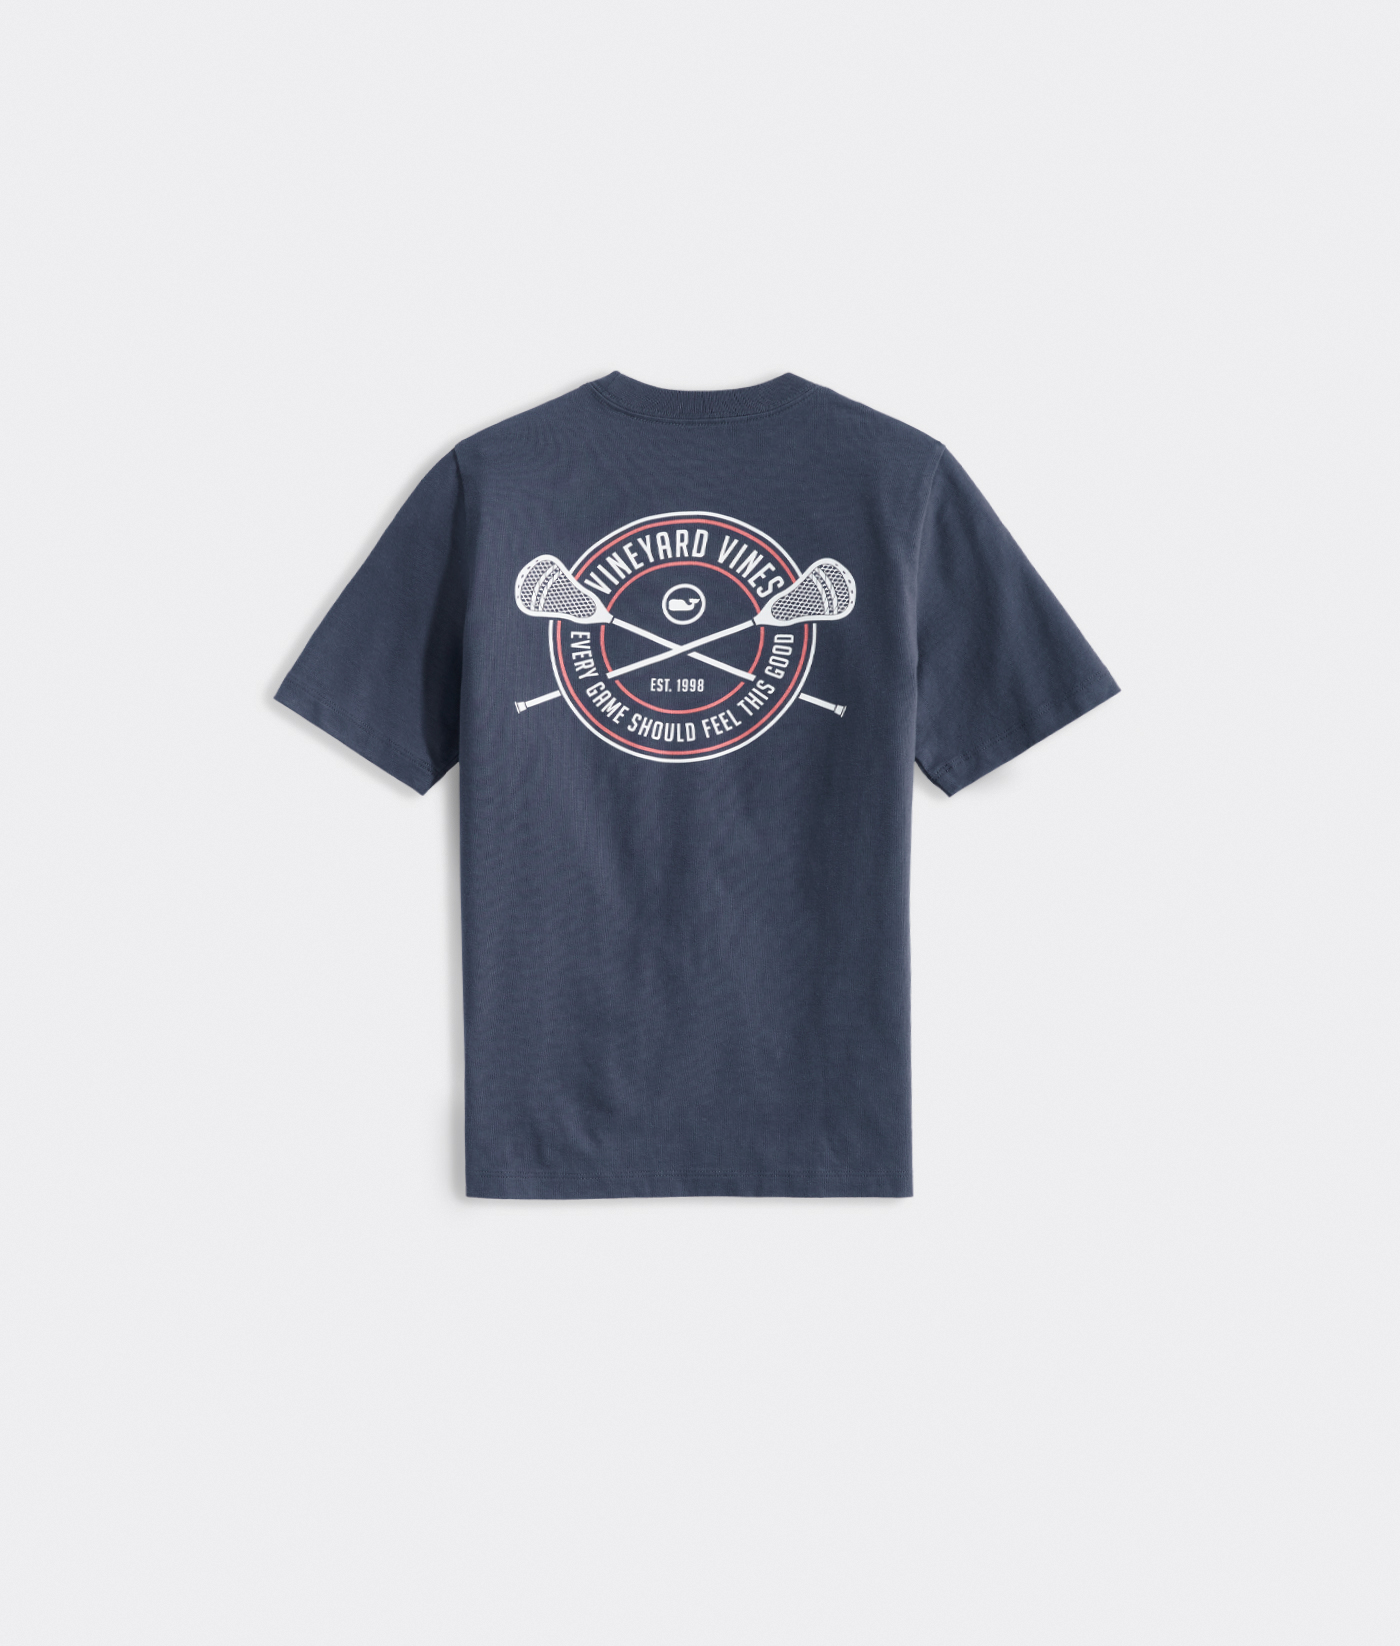 Vineyard Vines 100% Cotton Lacrosse Tee Shirt (Men's Small) Blue